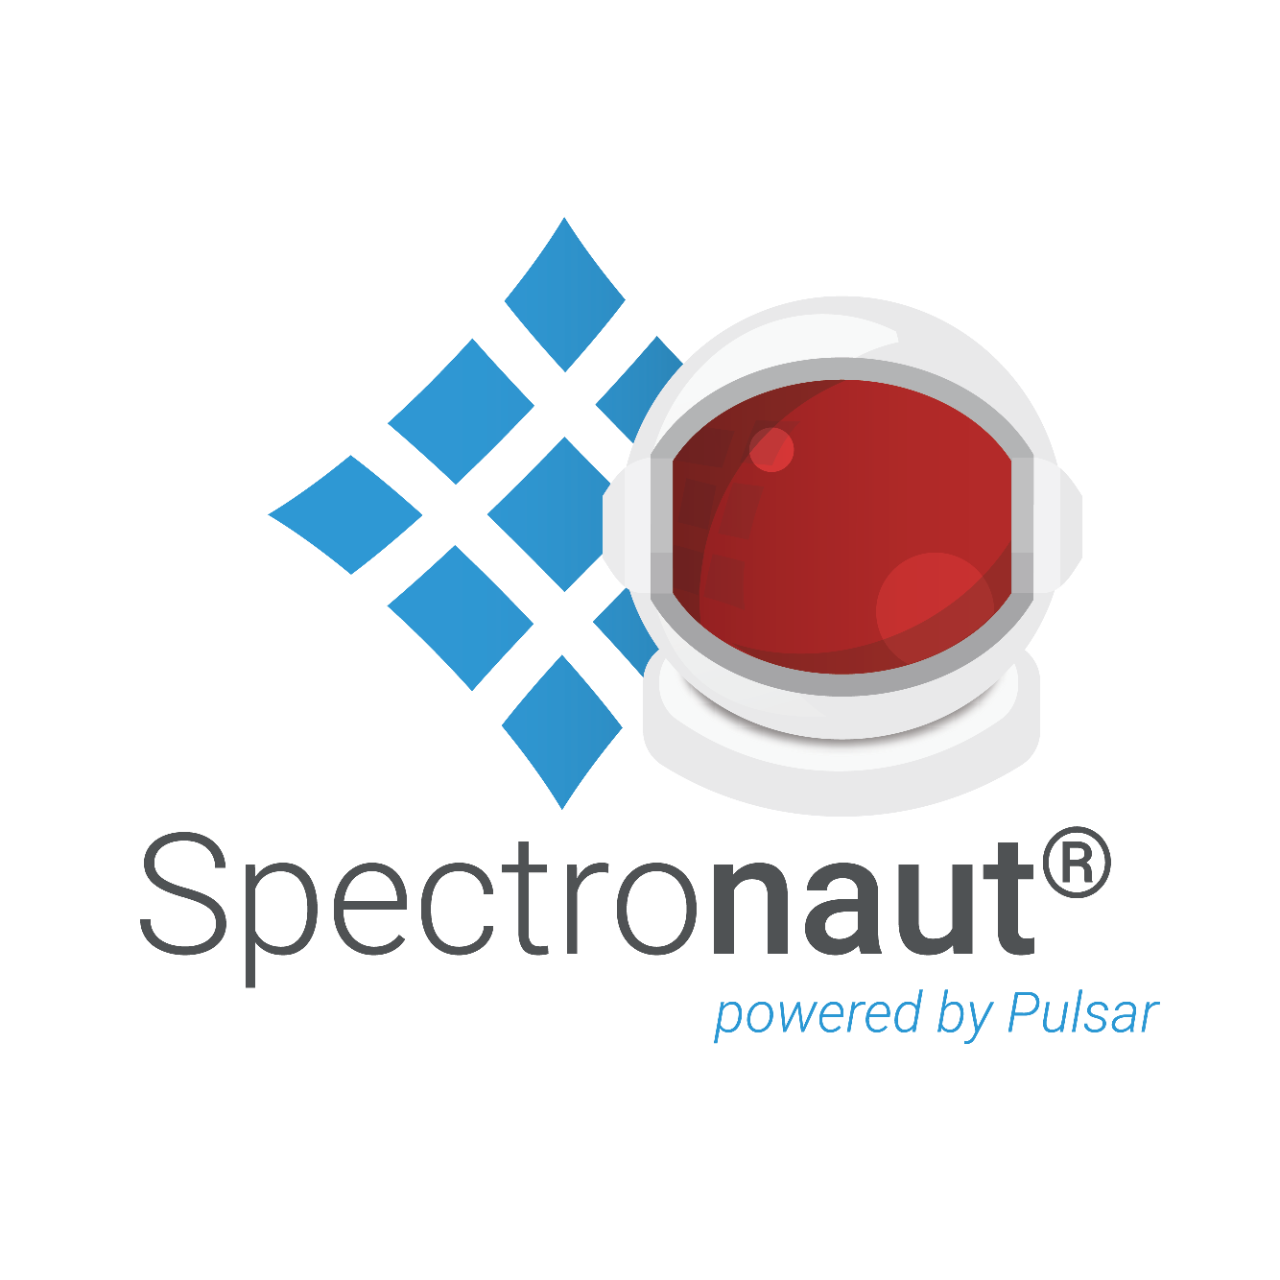 Spectronaut